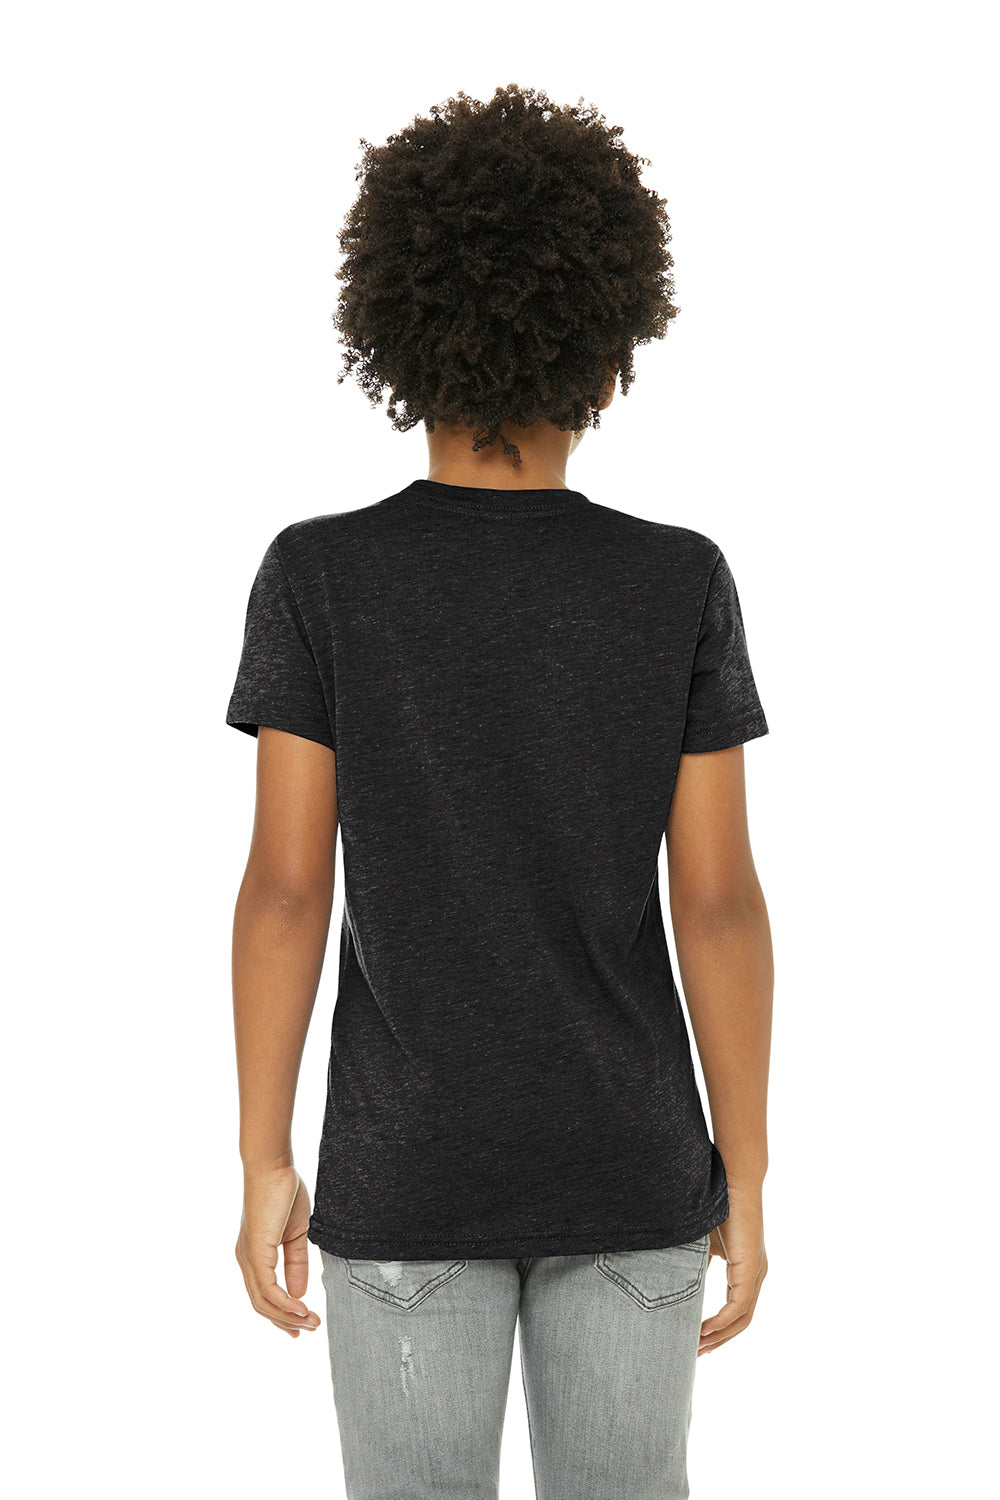 Bella + Canvas 3413Y Youth Short Sleeve Crewneck T-Shirt Charcoal Black Model Back